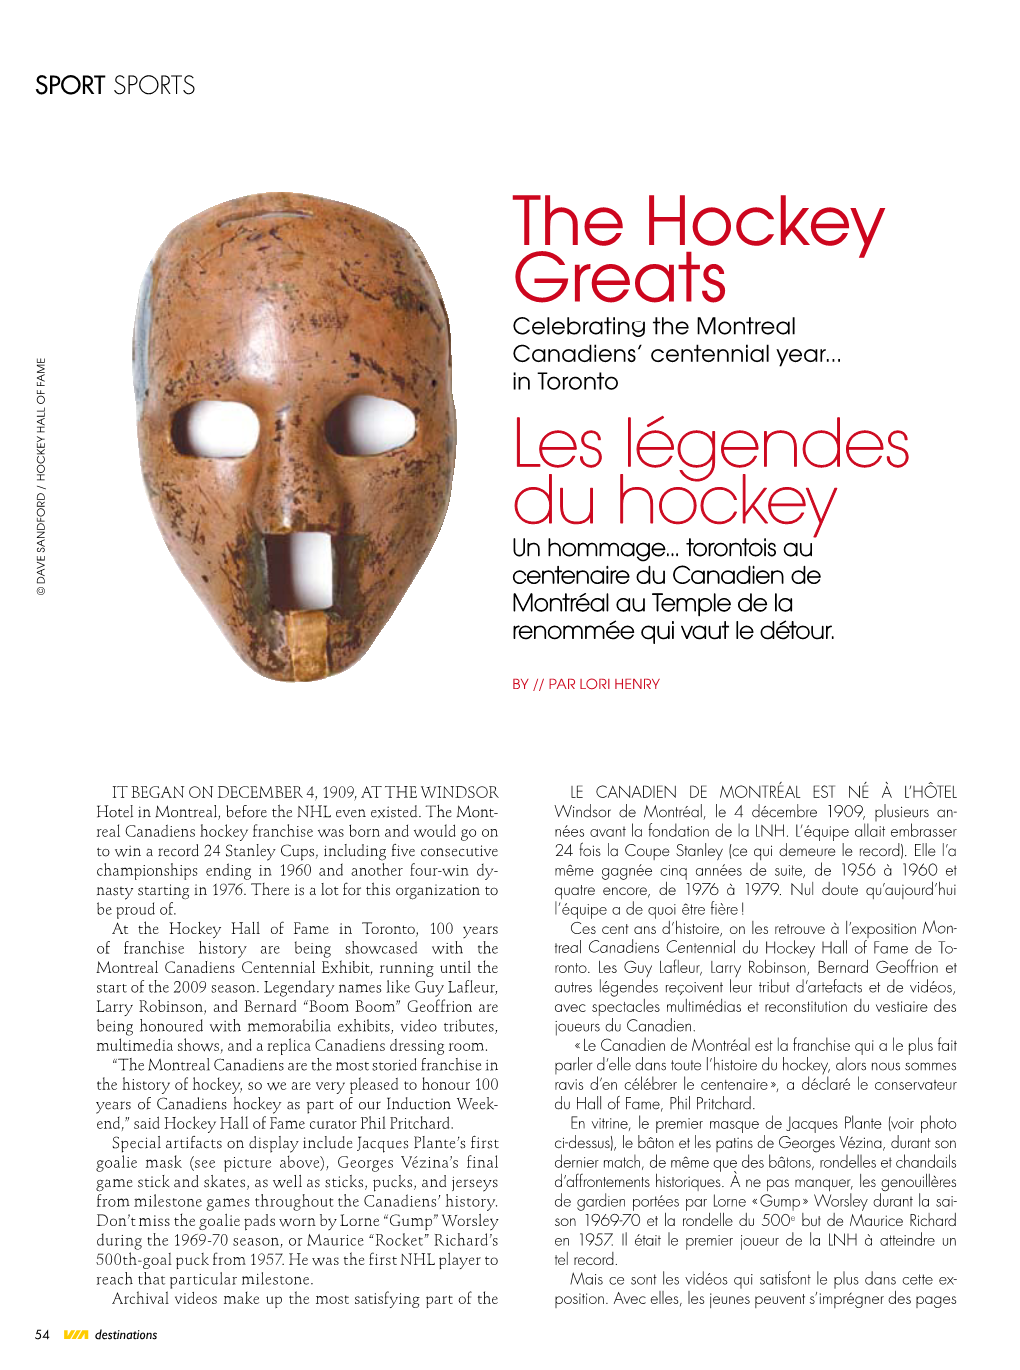 The Hockey Greats Celebrating the Montreal